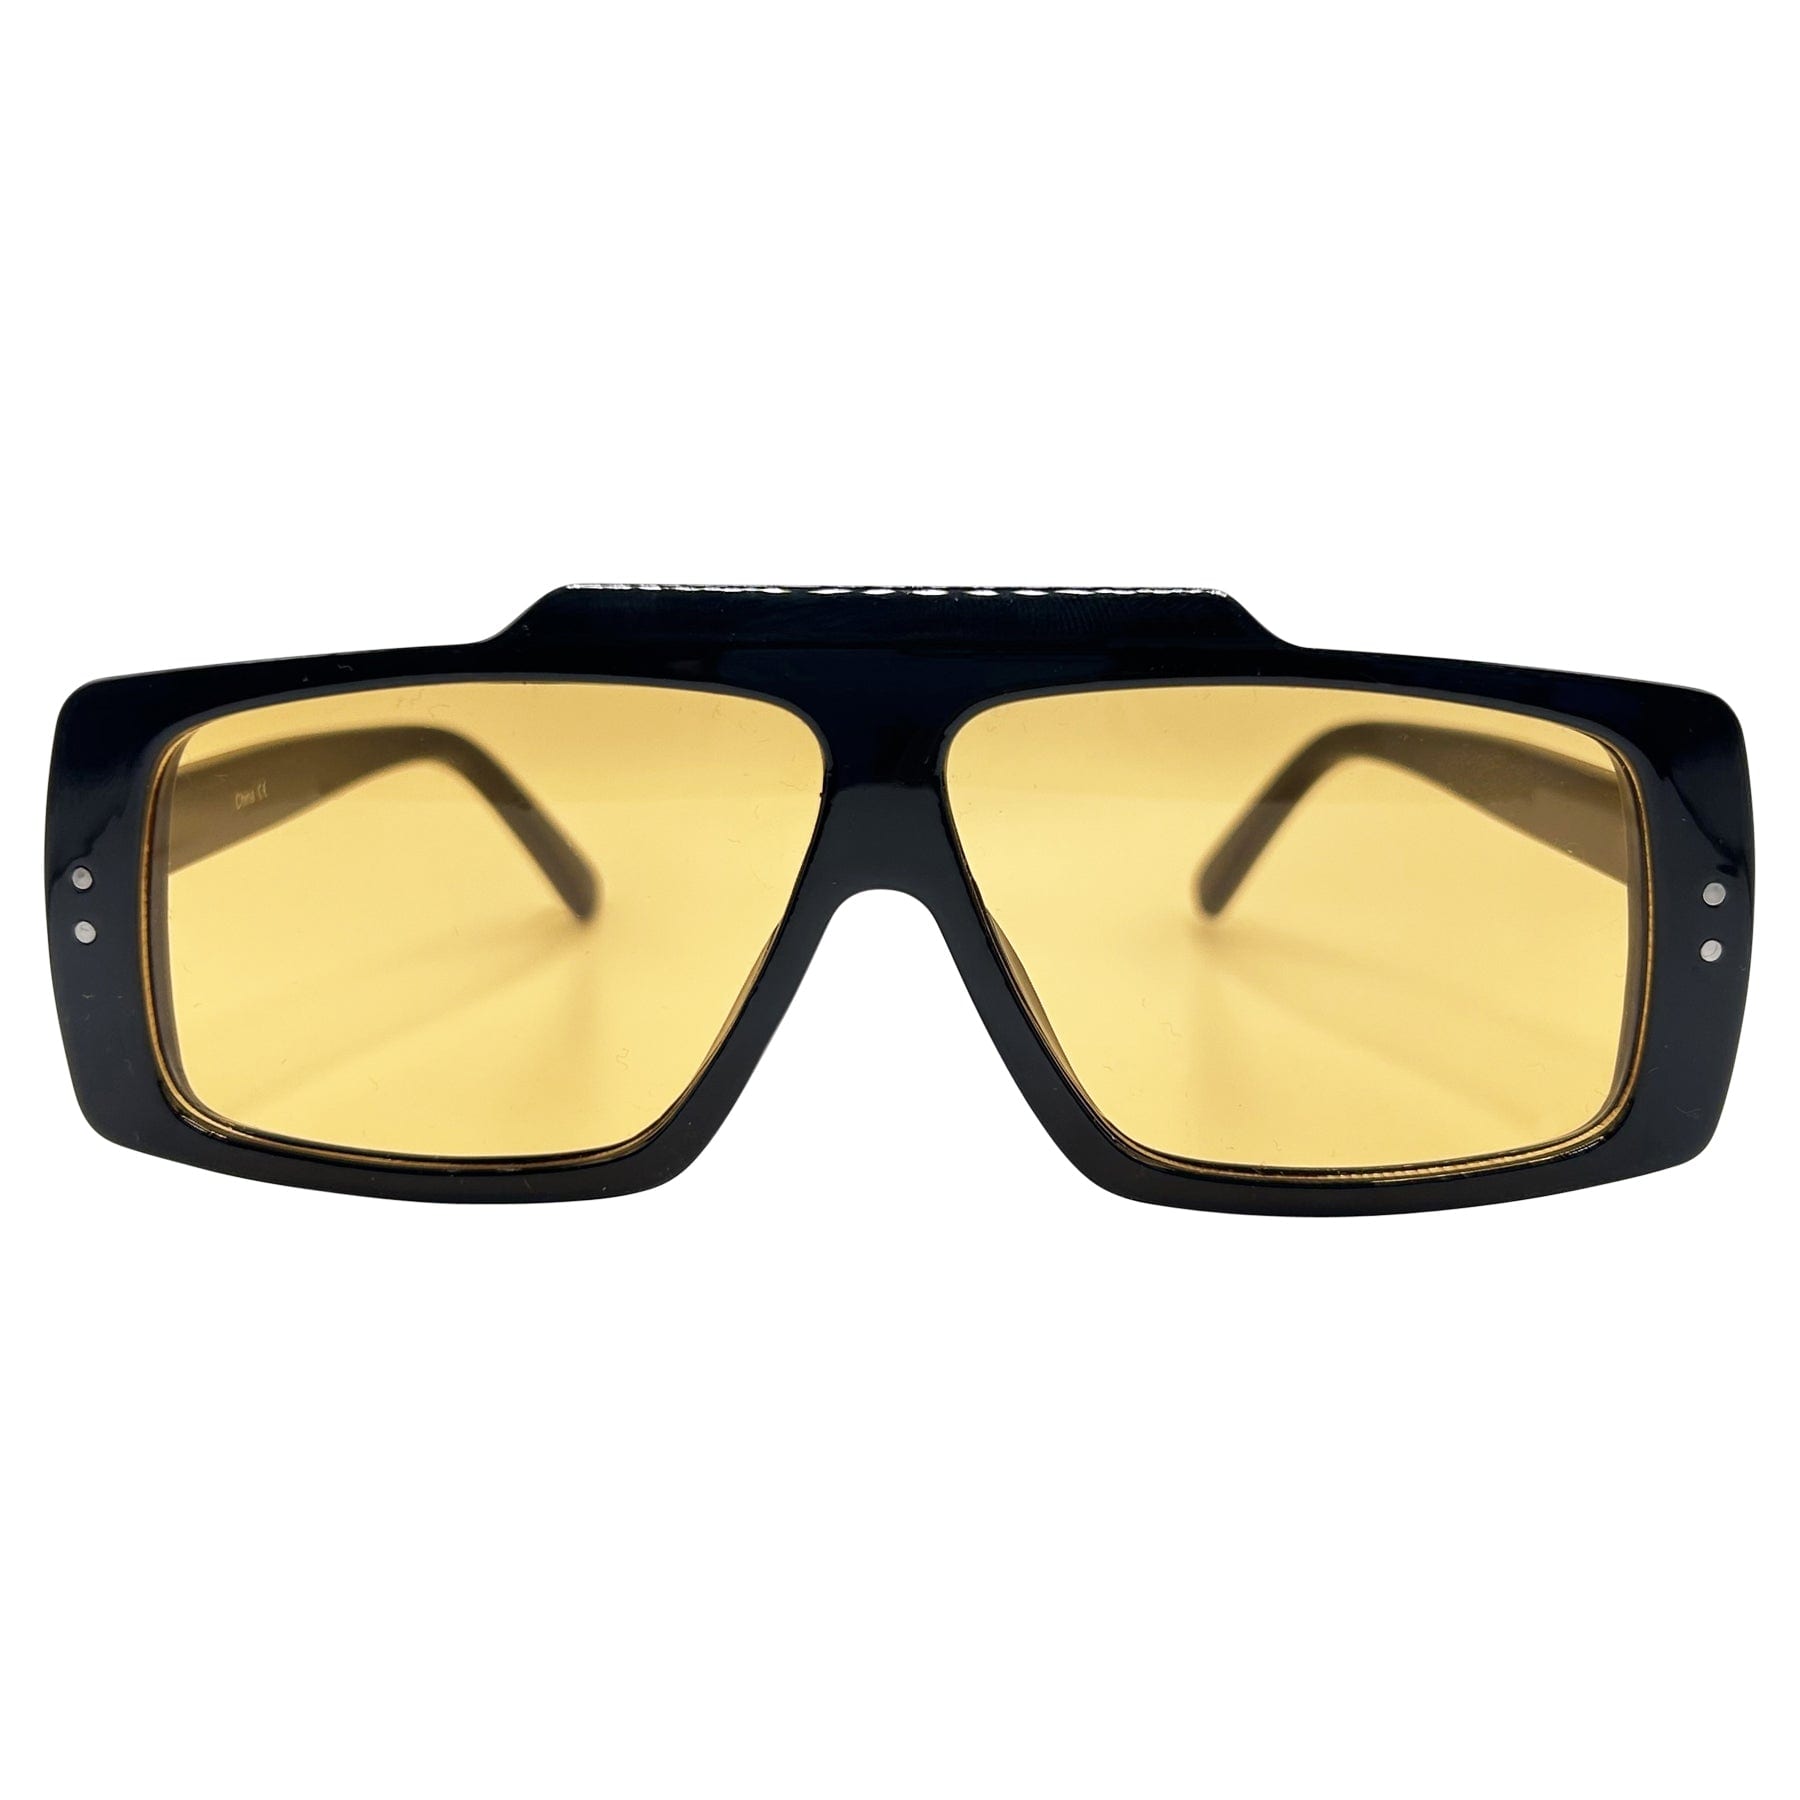 boho black aviator sunglasses with yellow flash lens